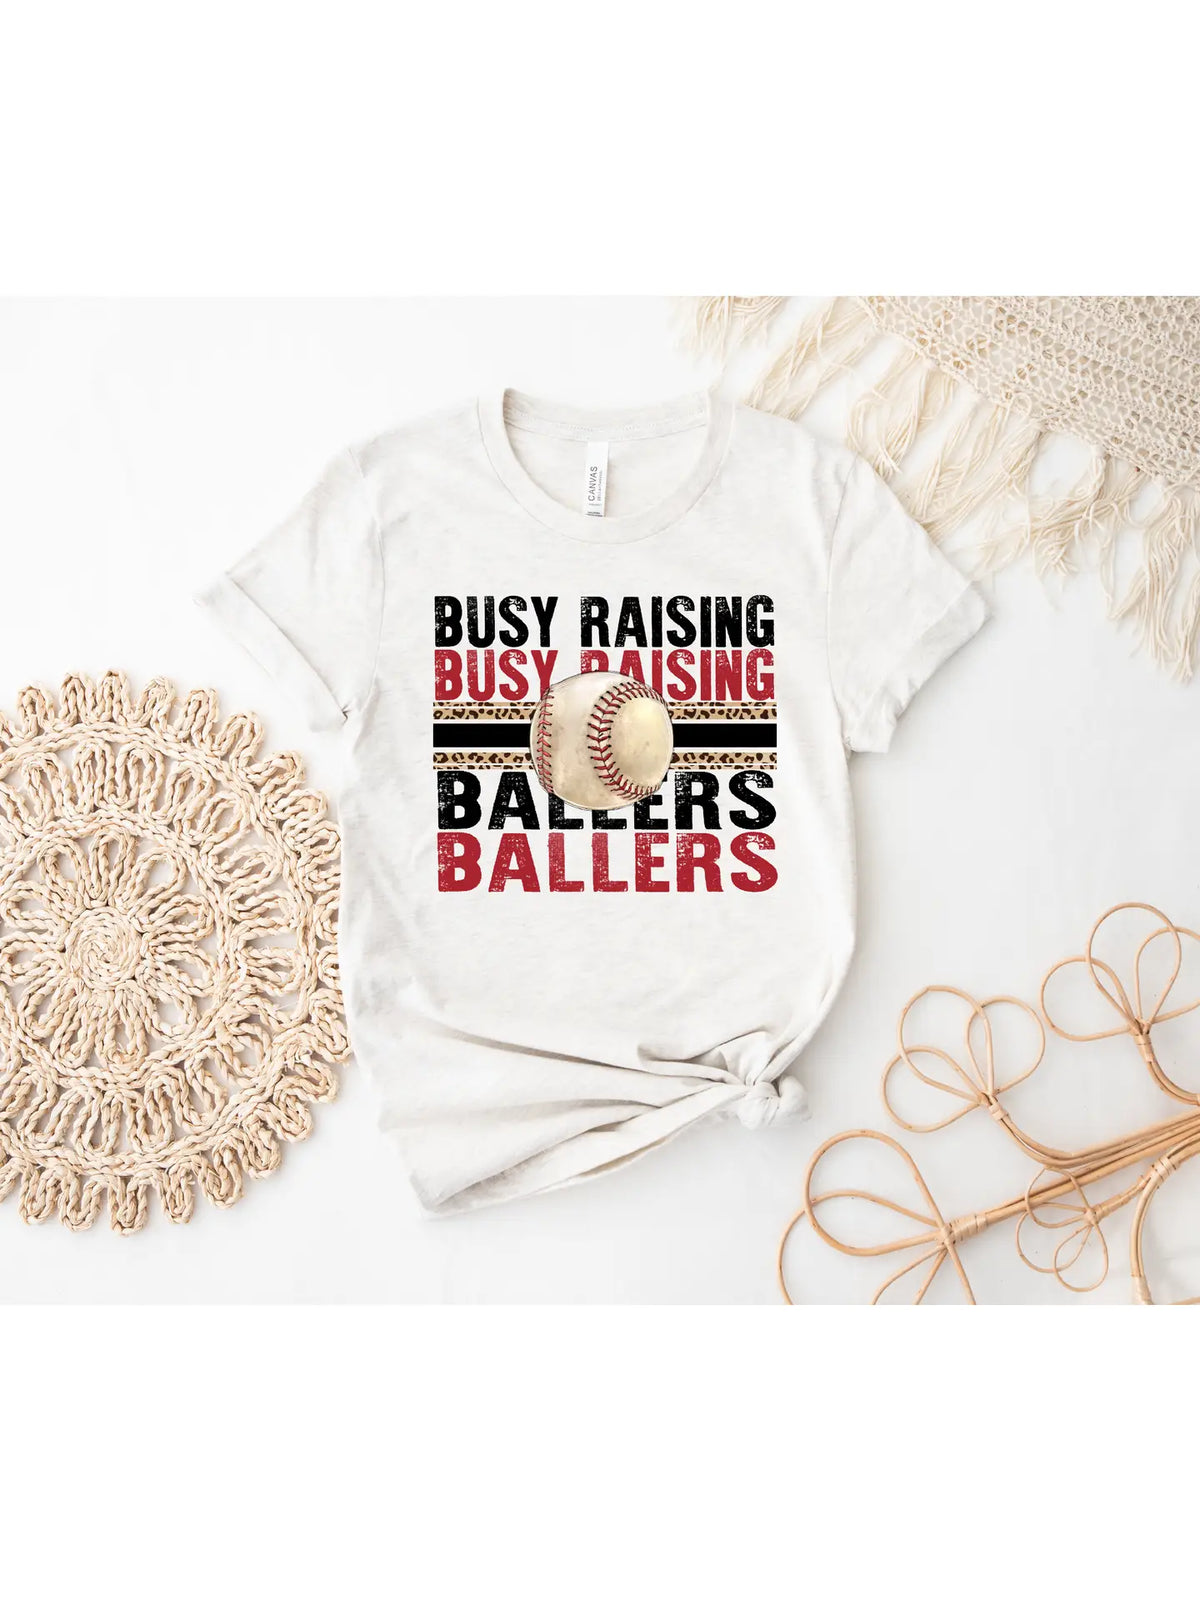 Busy Raising Ballers - T-shirt